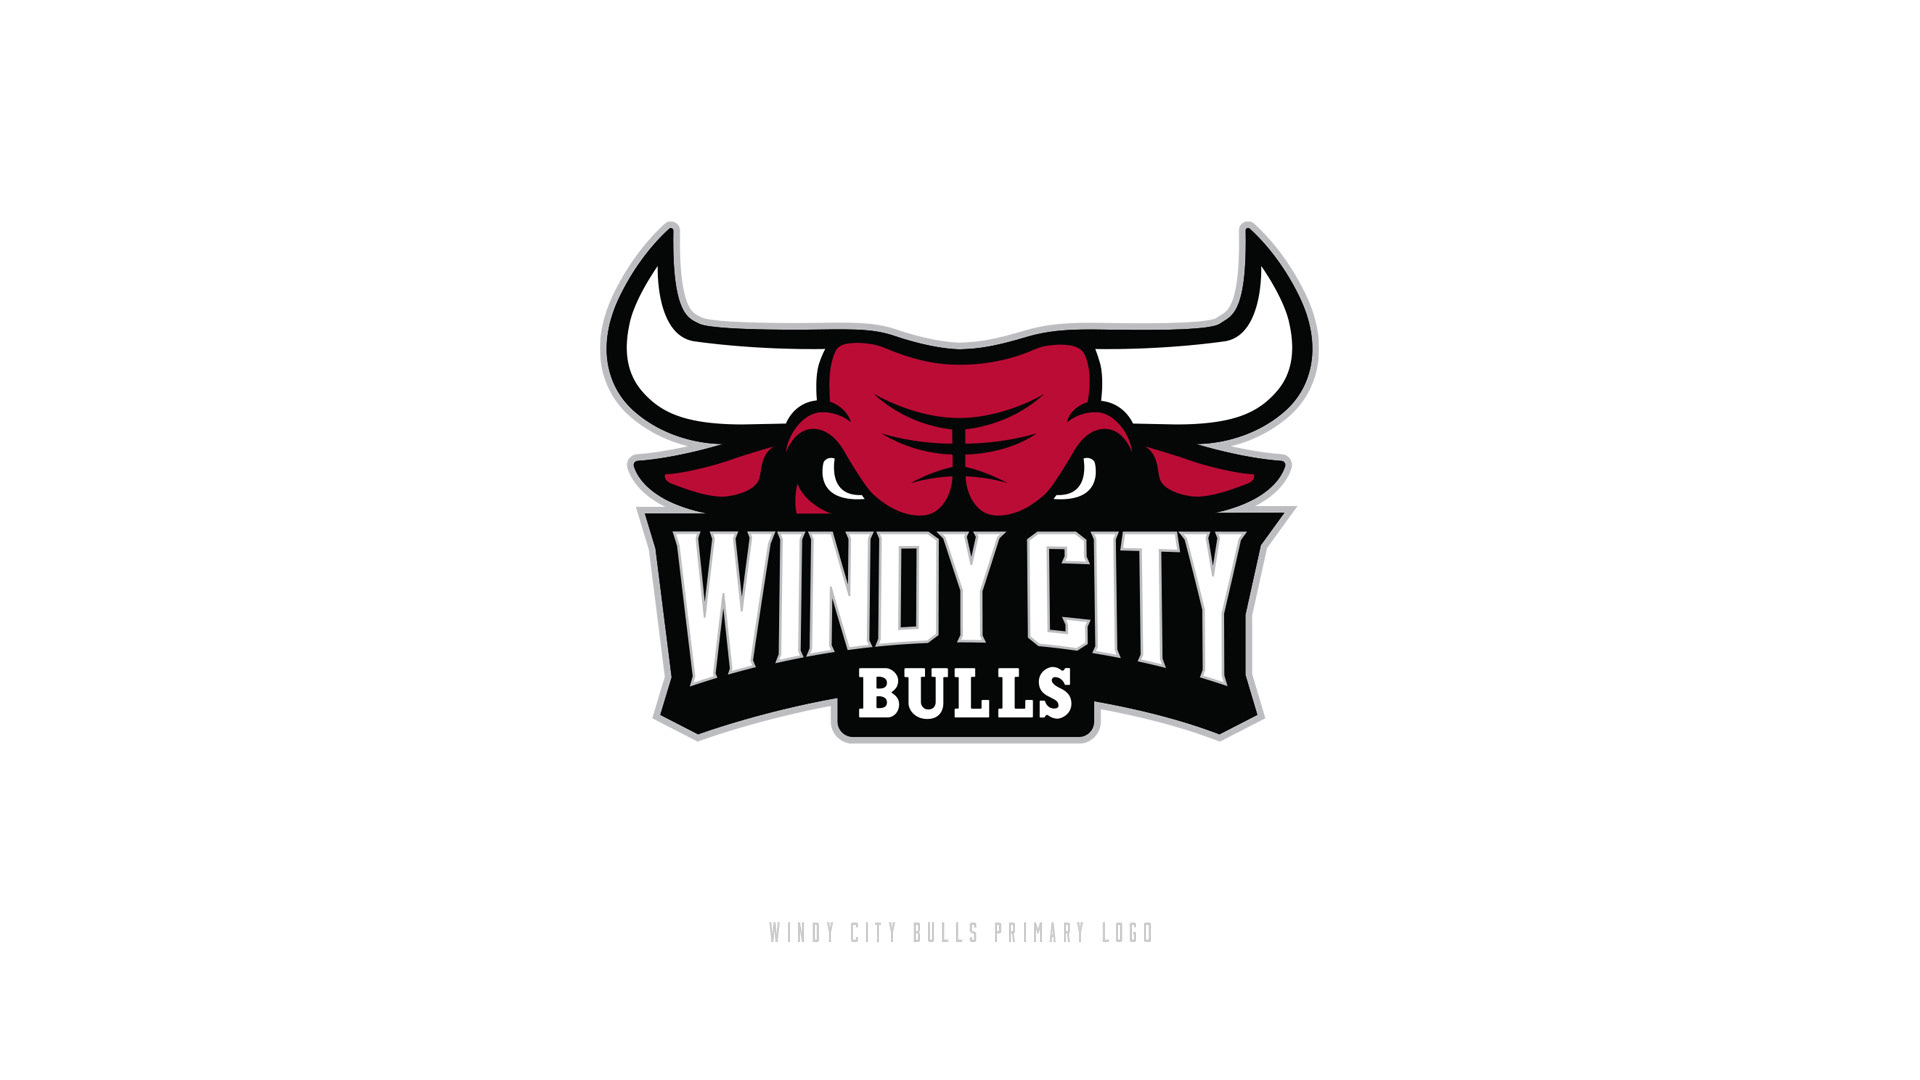 UPDATE! The Windy City Bulls & - Windy City Bulls